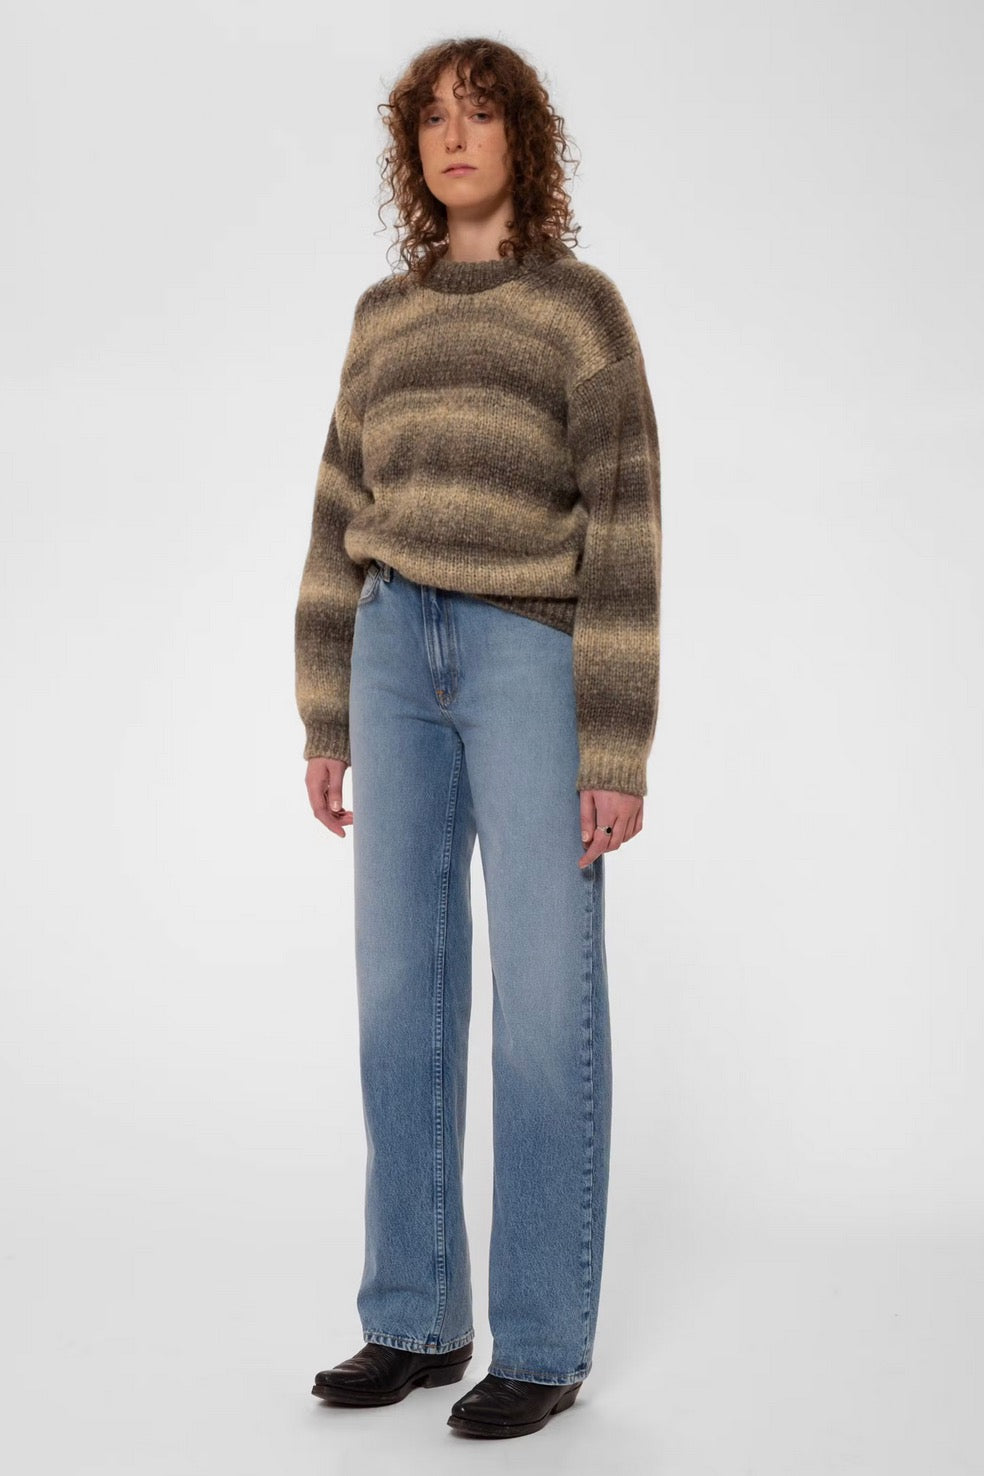 ROSA Fuzzy Knit multi | Nudie Jeans